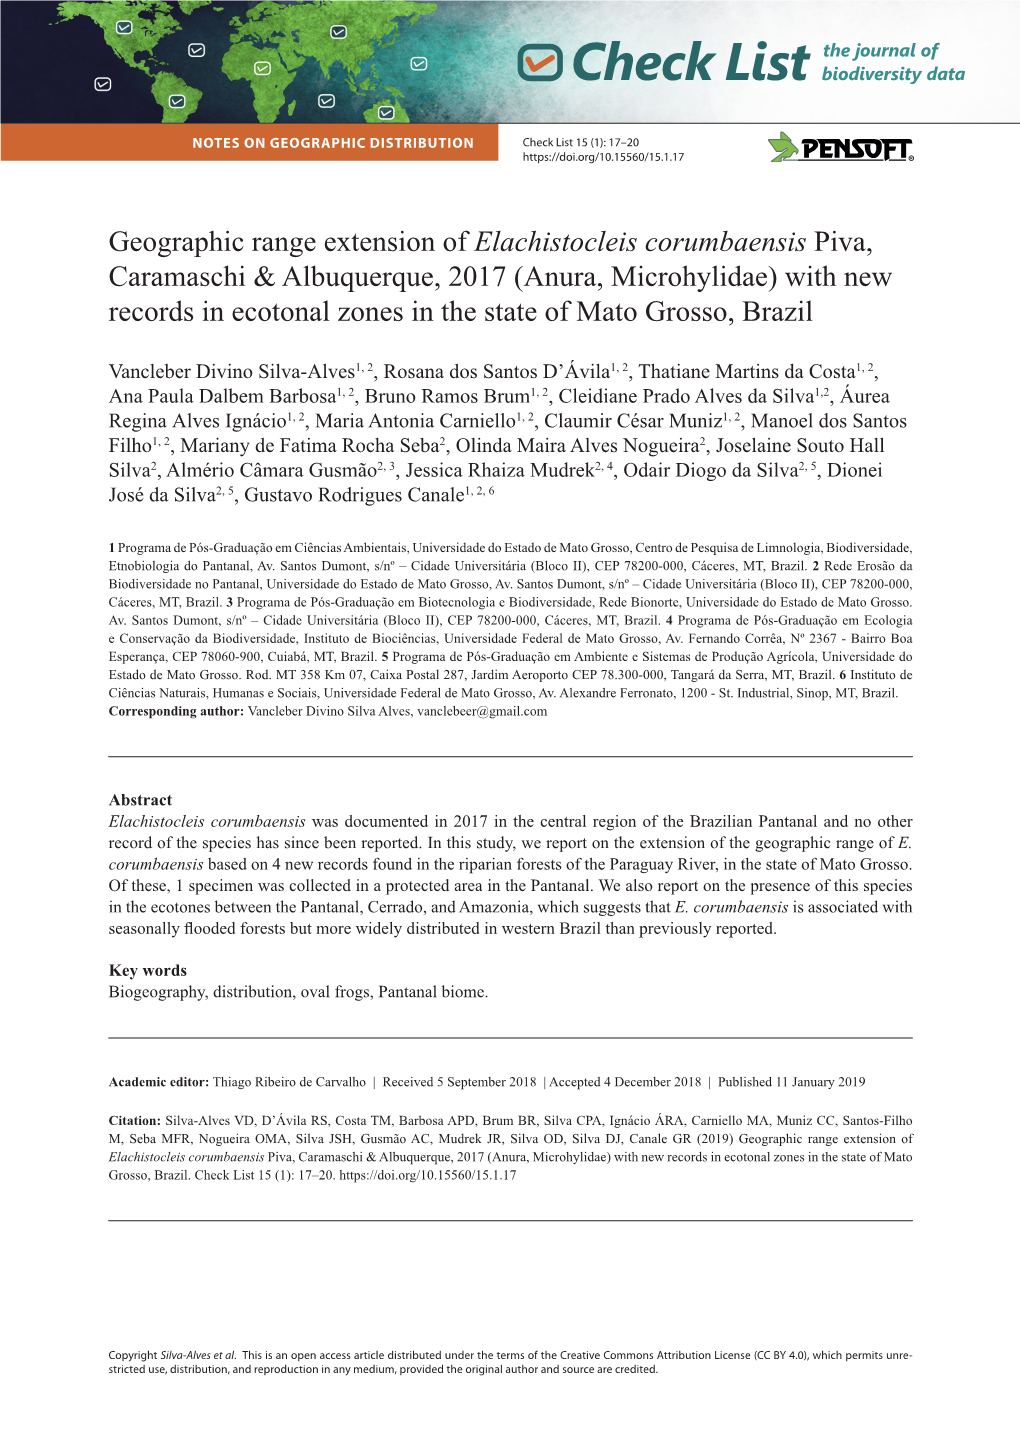 Geographic Range Extension of Elachistocleis Corumbaensis Piva